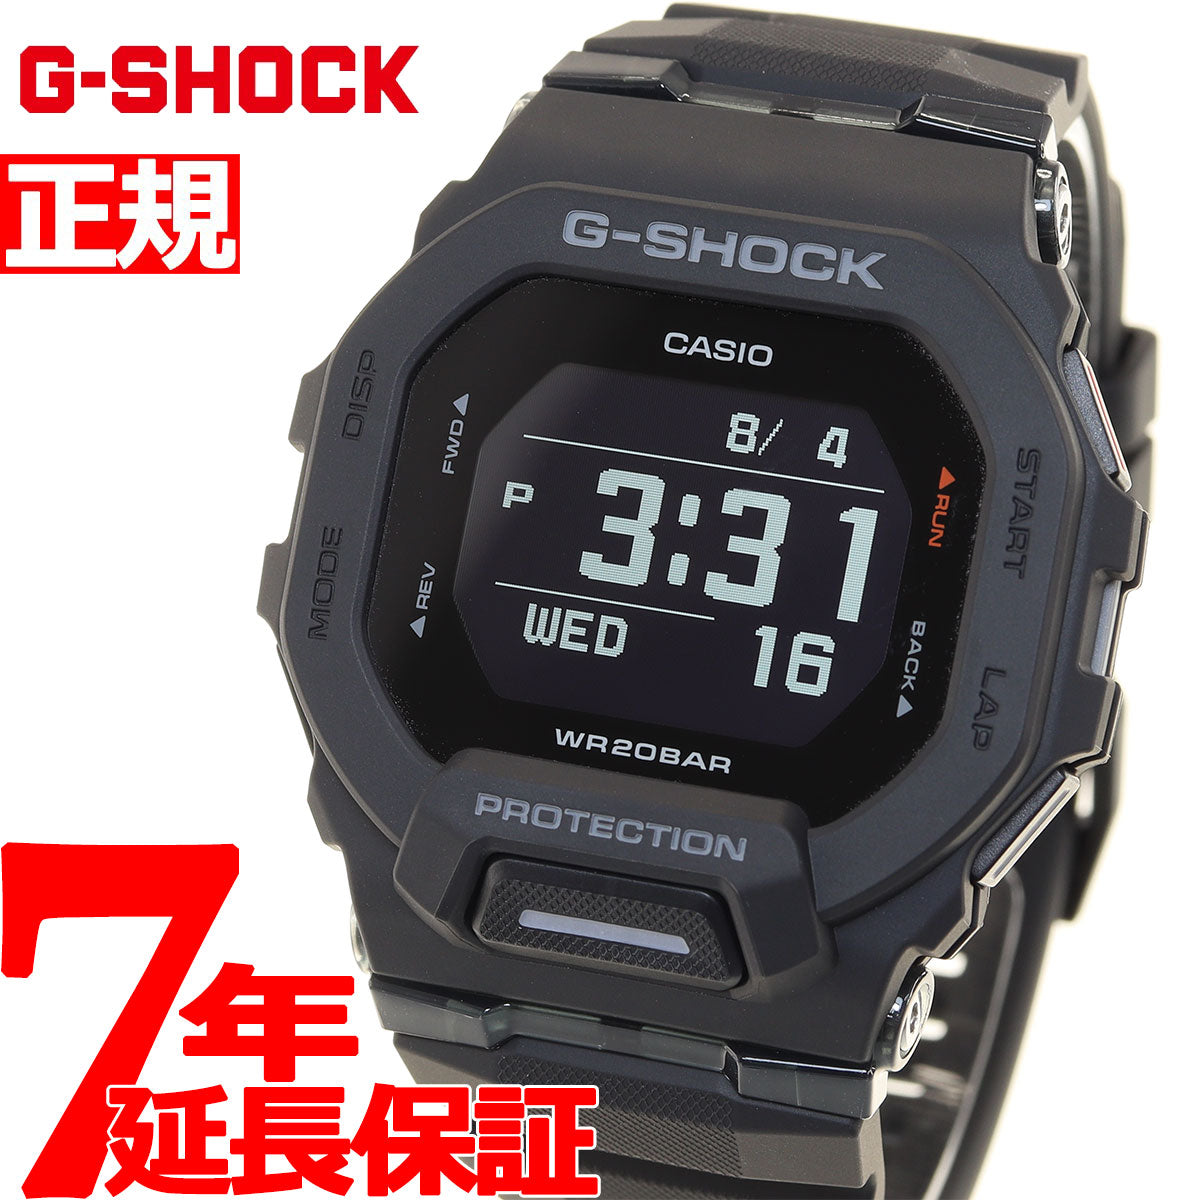 G-SHOCK Gショック G-SQUAD ジースクワッド GBD-200シリーズ GBD-200